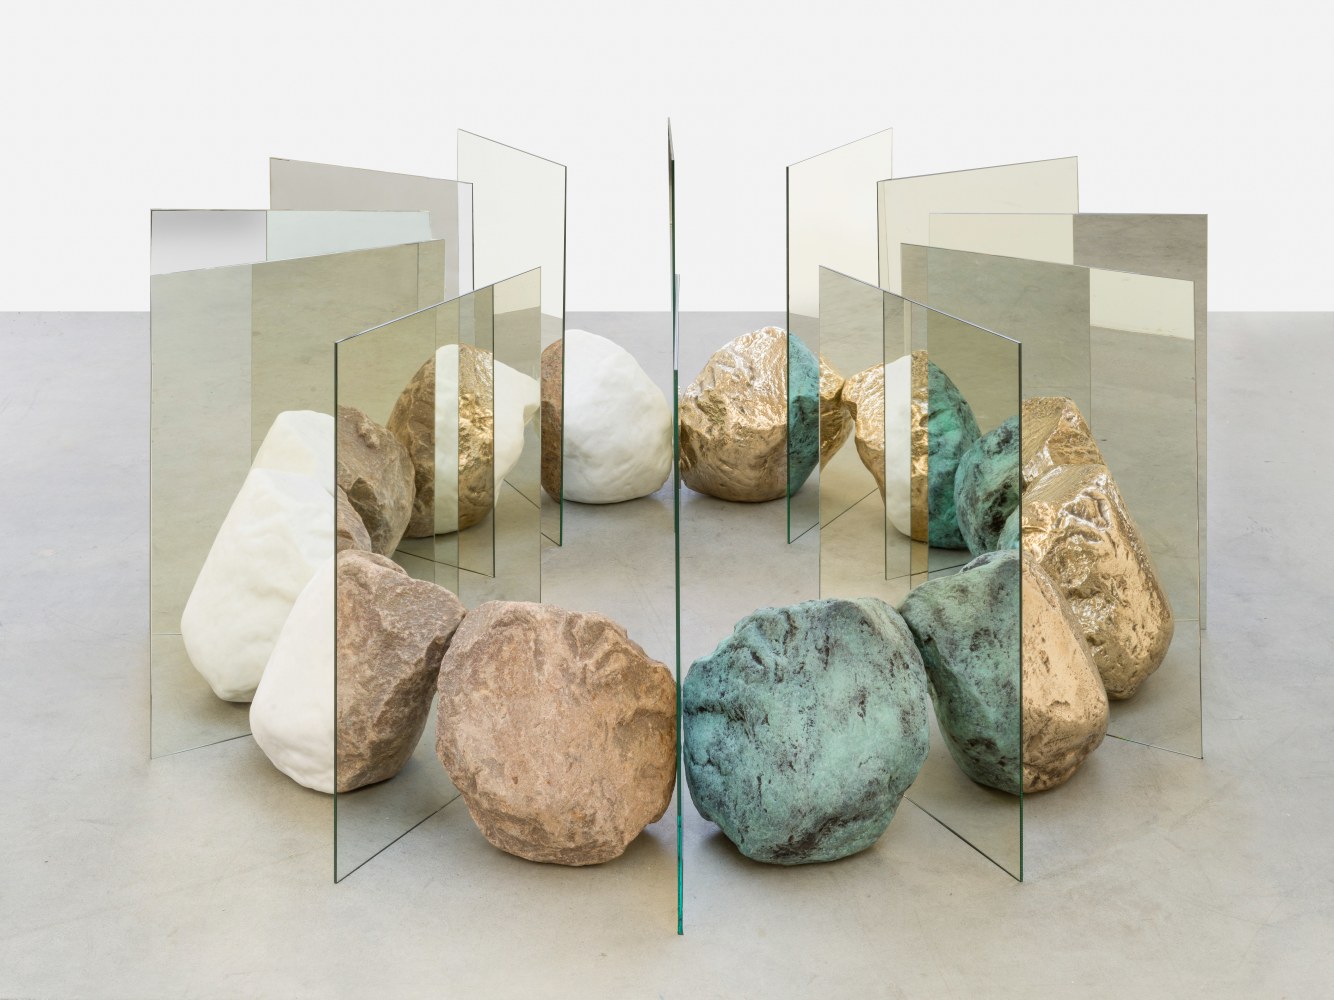 Alicja Kwade

Steinkreis

2020

Bronze, marble, stone, mirror

38 1/8 x 87 3/8 x 87 3/8 inches (97 x 222 x 222 cm)

AKW 712

&amp;nbsp;